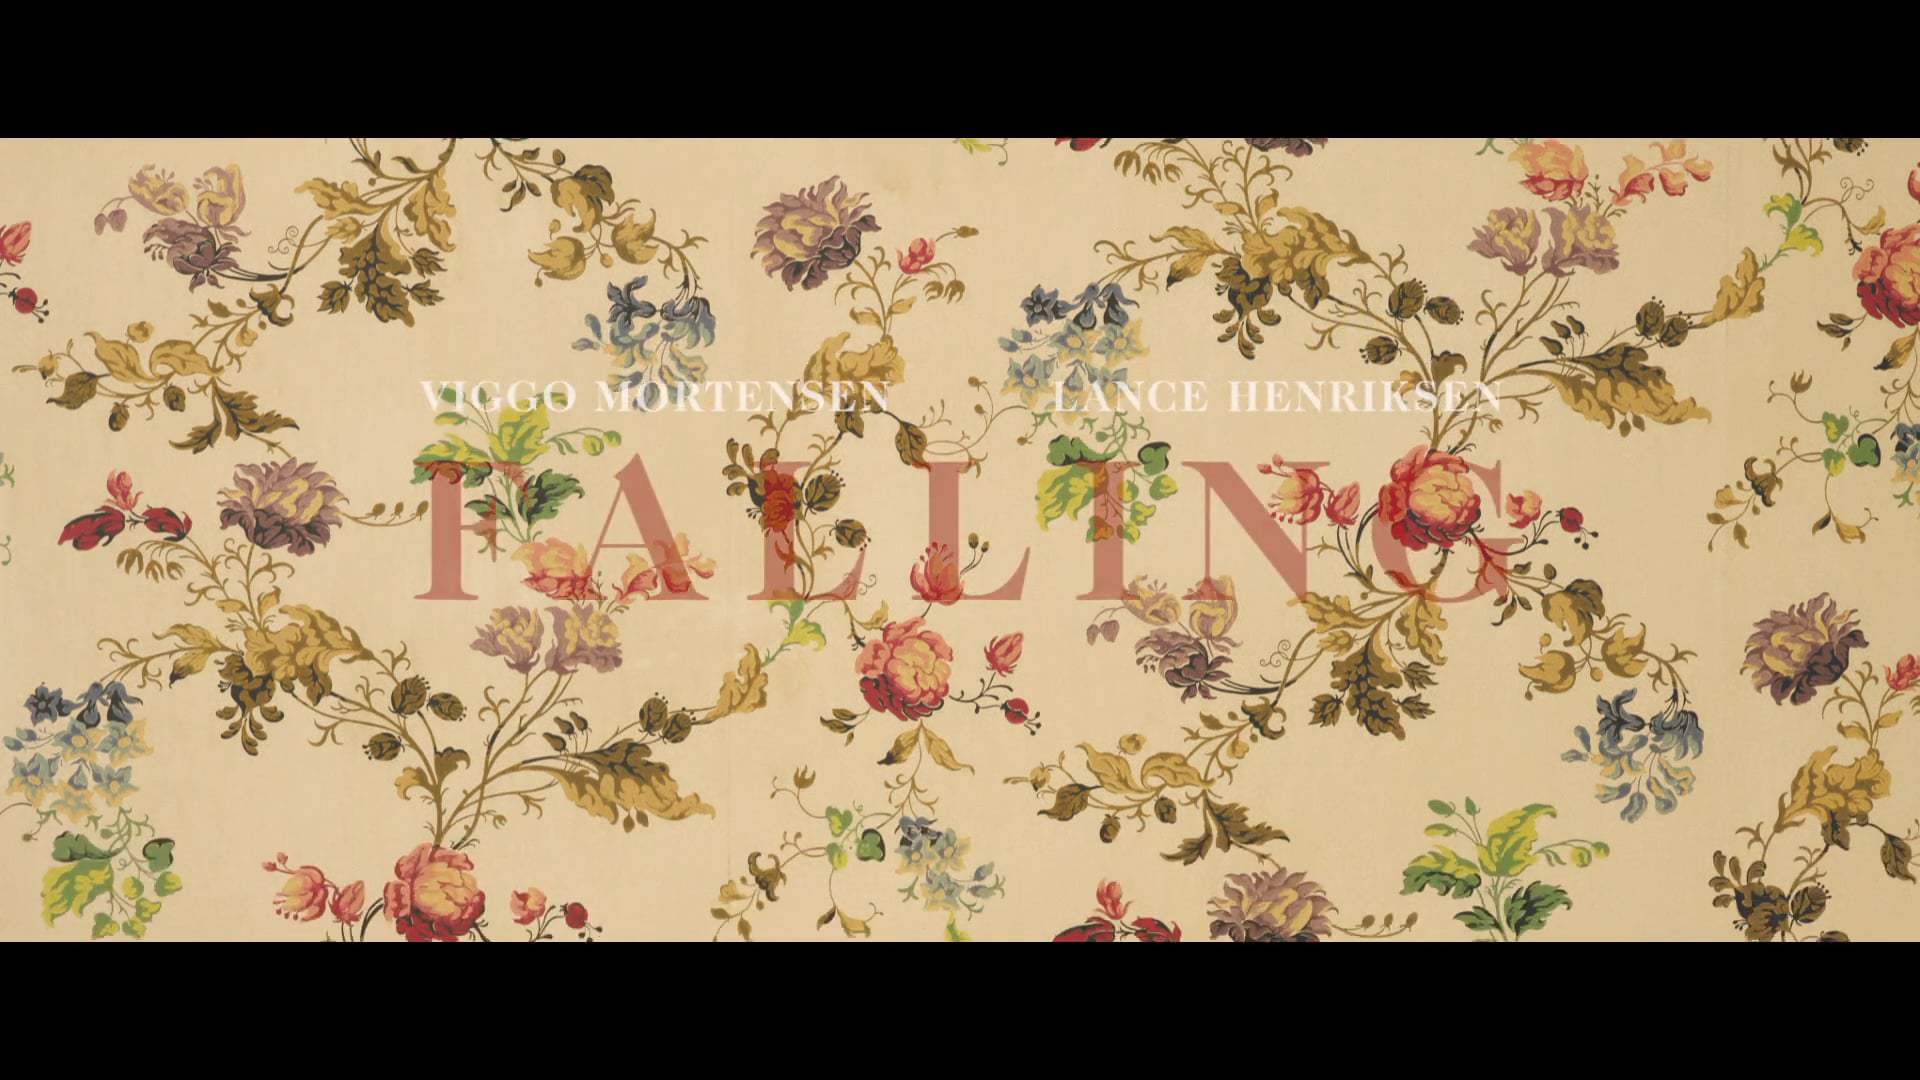 Falling Trailer (2020)